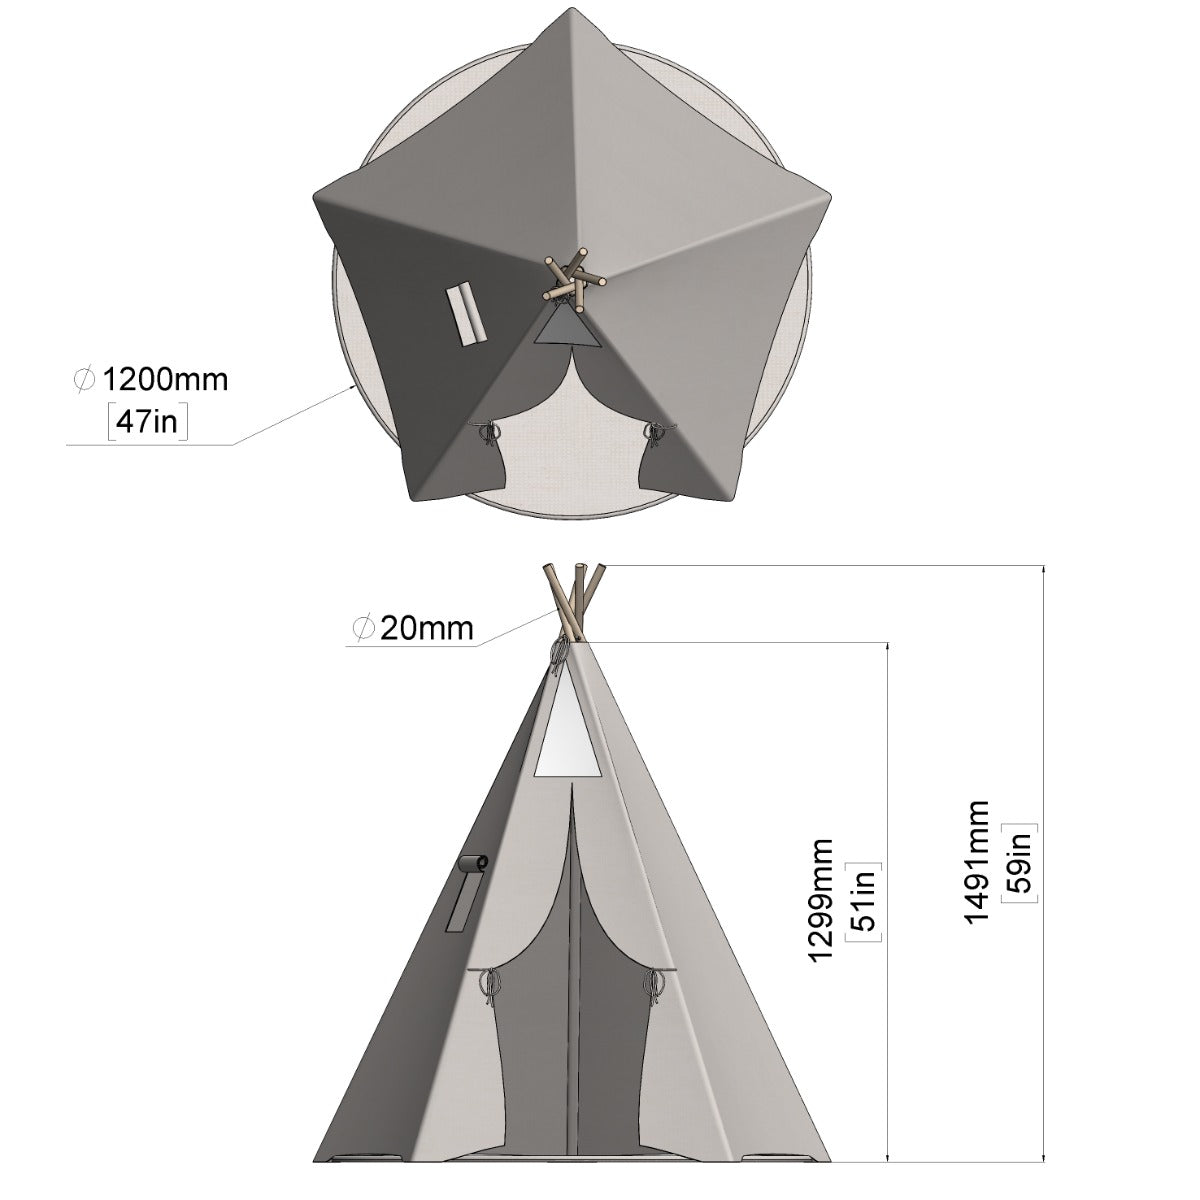 Rebo Montessori Pikler Style Teepee Play Tent